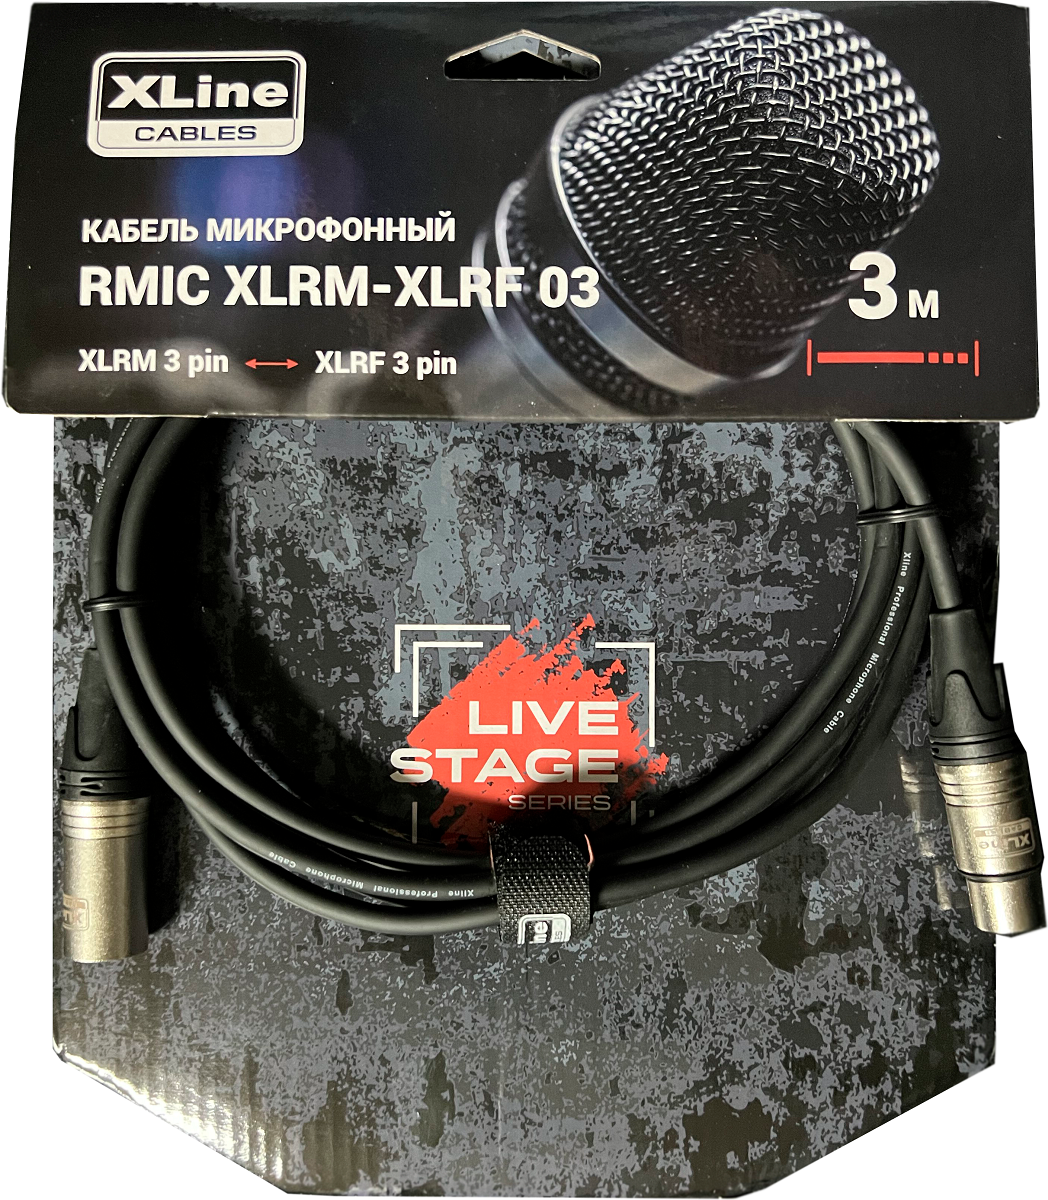 Xline Cables RMIC XLRM-XLRF 03 Кабель микрофонный XLR 3 pin male - XLR 3 pin female длина 3м